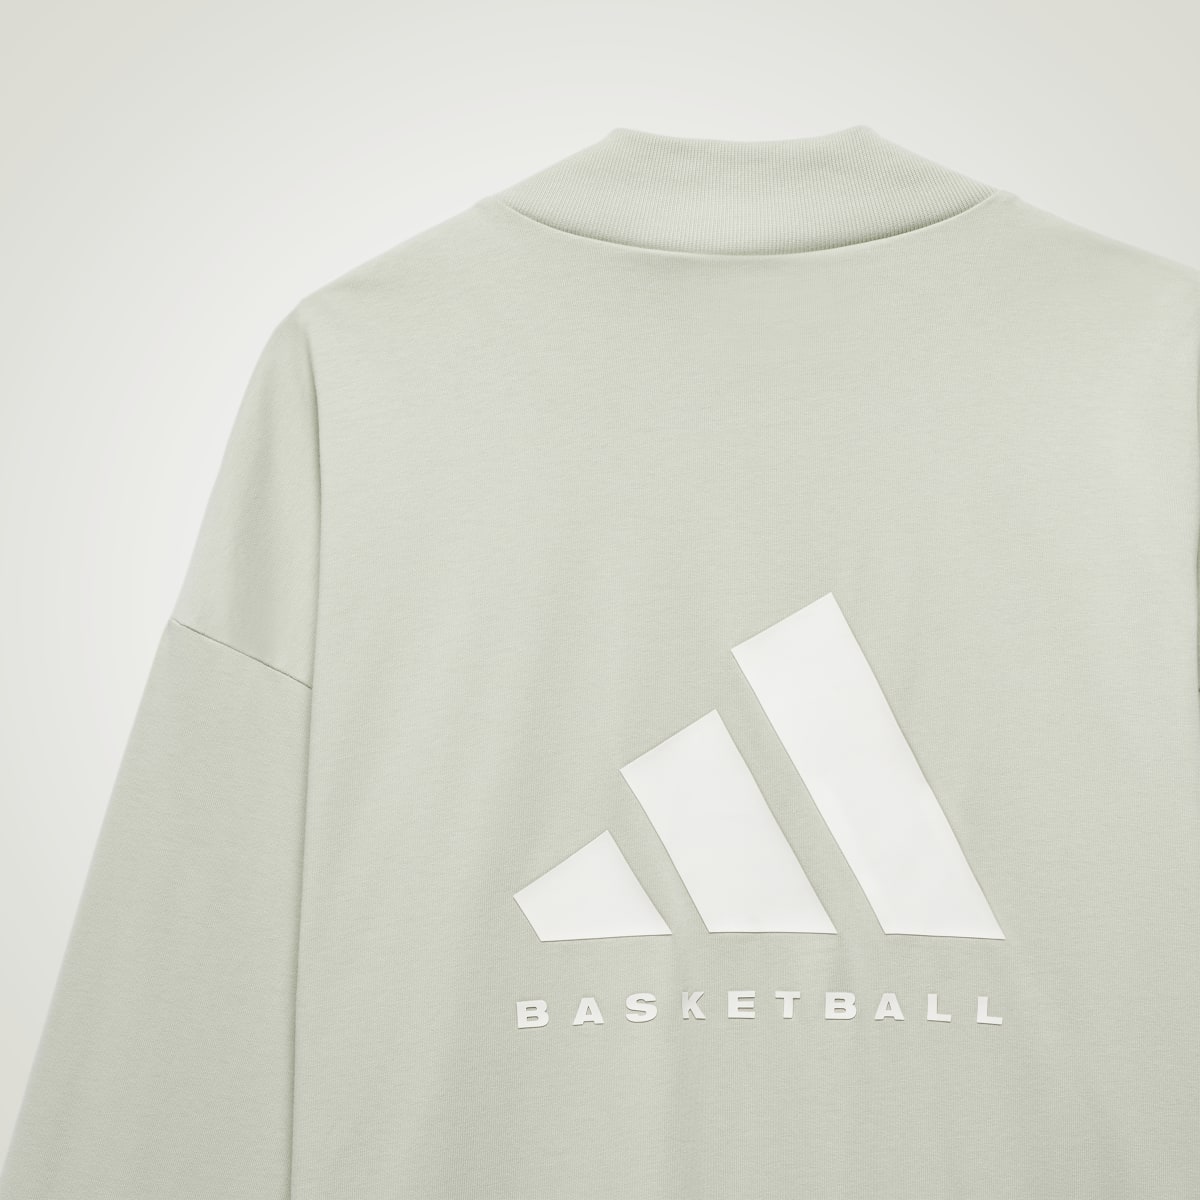 Adidas Basketball Long Sleeve Tee (Gender Neutral). 4